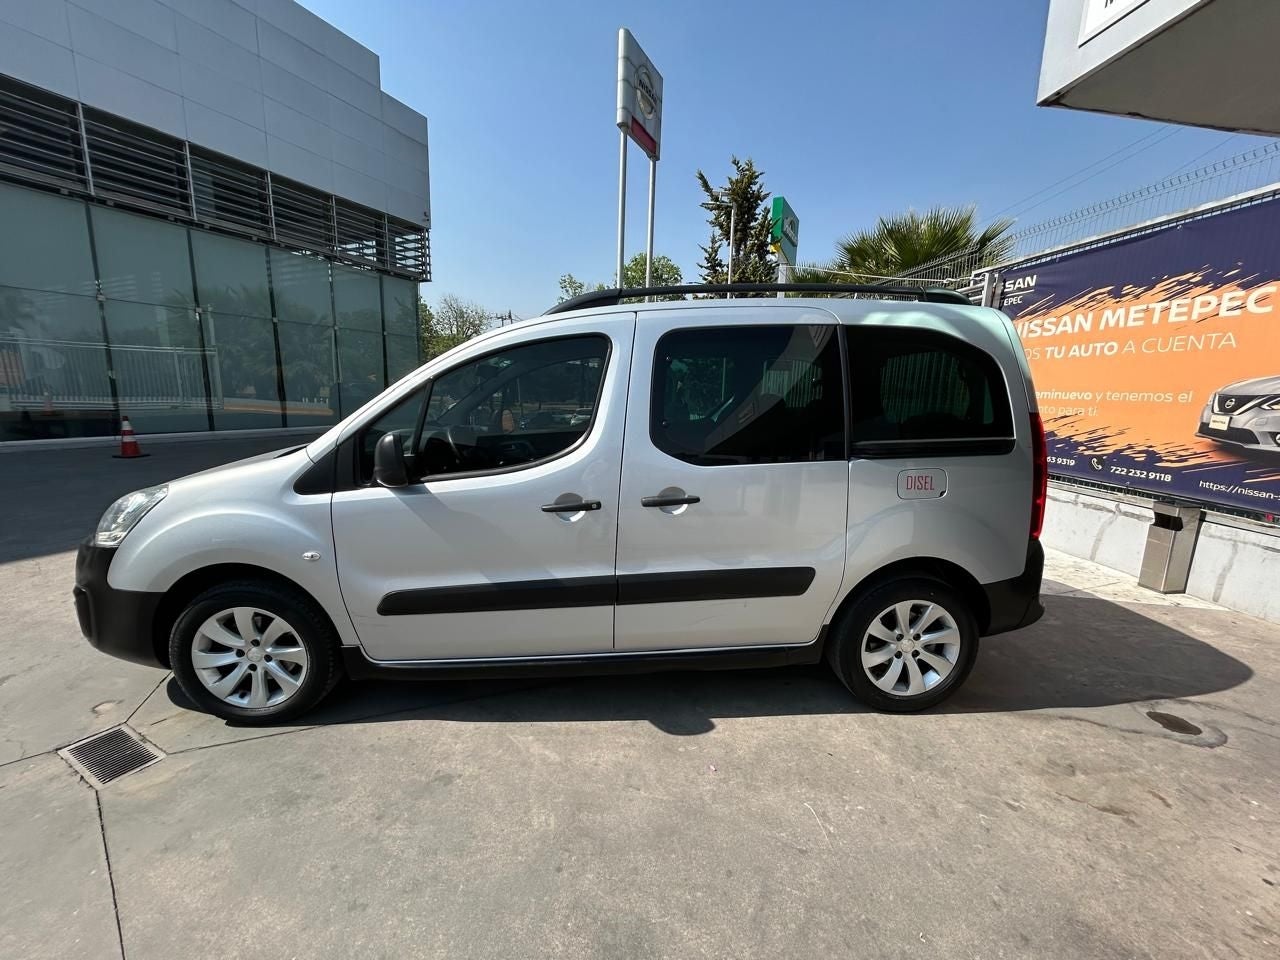 2019 Peugeot Partner 1.6 Hdi 5 Puertas Mt